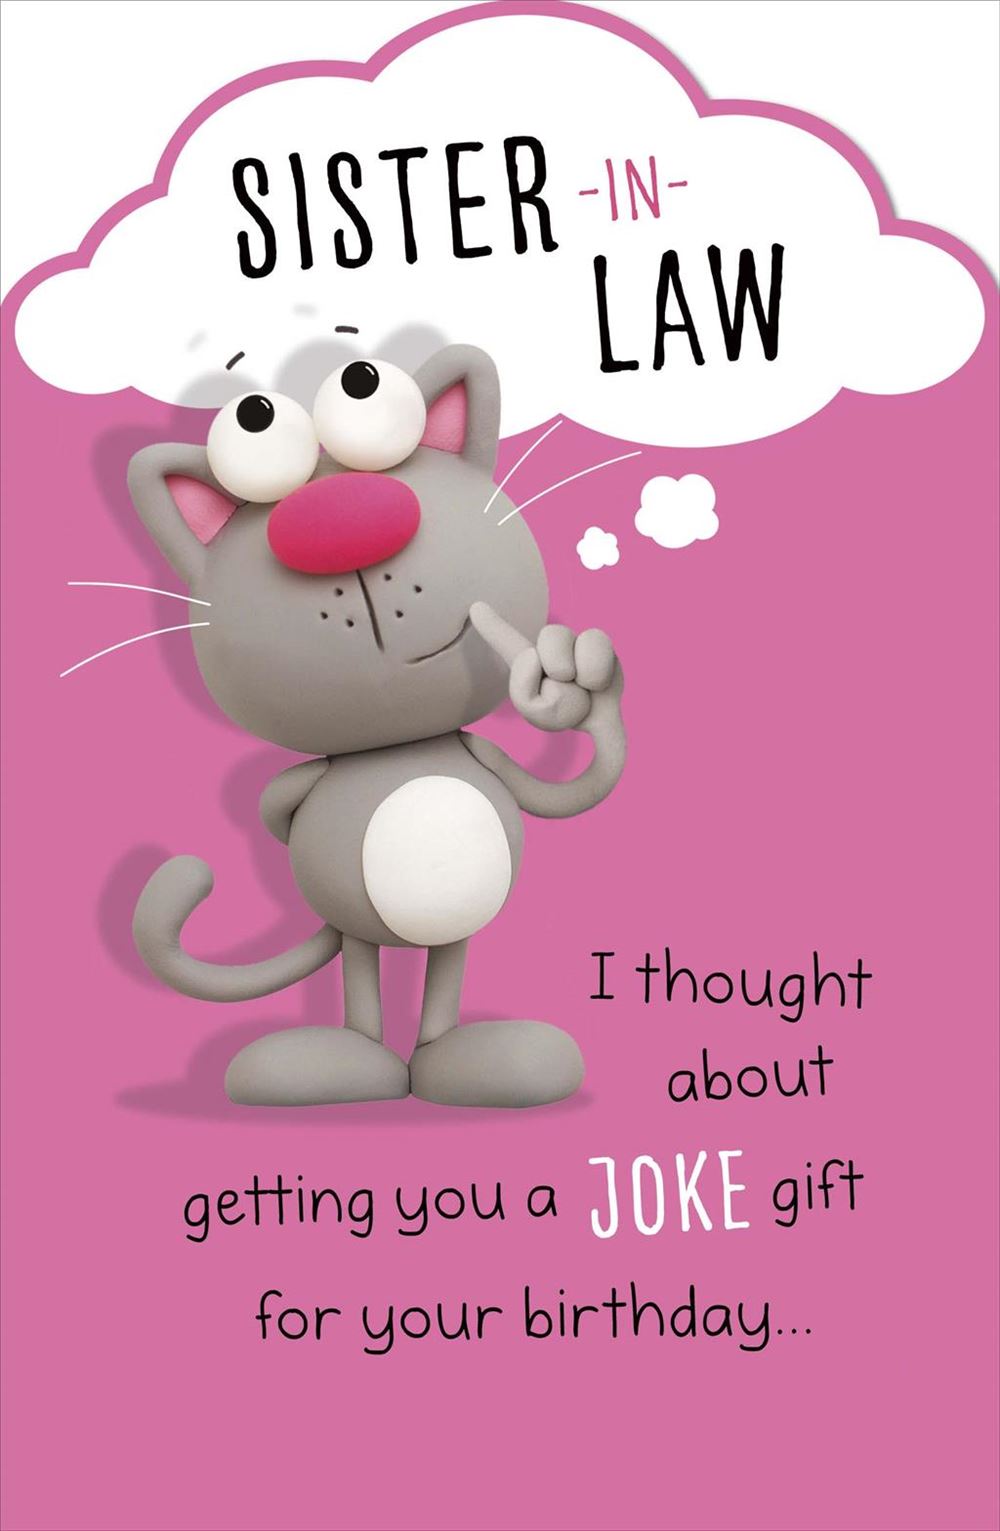 Humorous Sister-in-Law Birthday Card - A Joke Gift